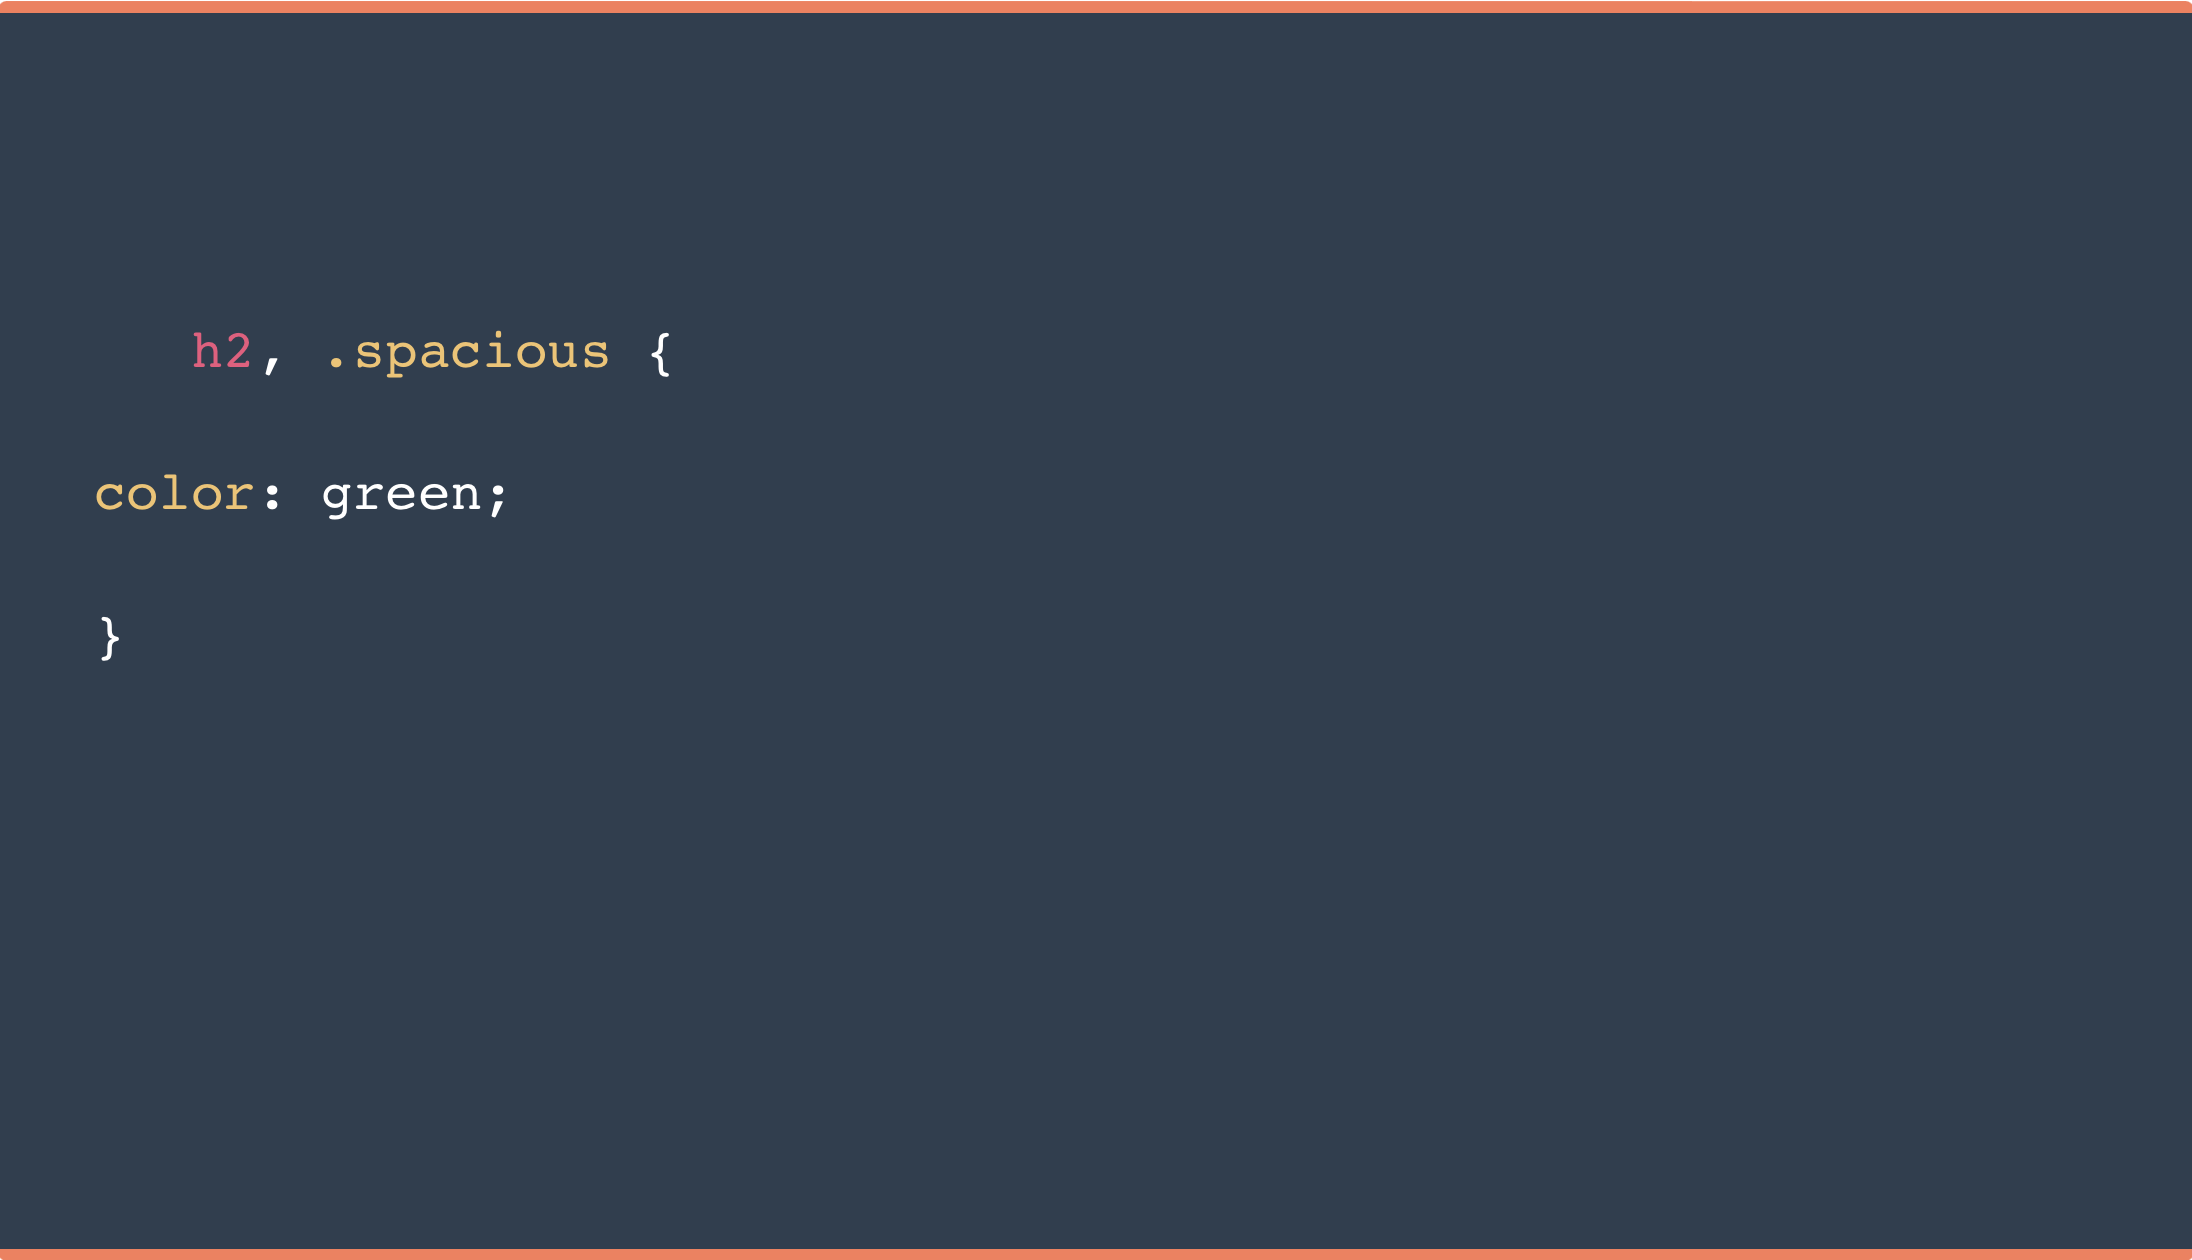 Ejemplo de código para aplicación de selectores combinados para múltiples elementos en CSS